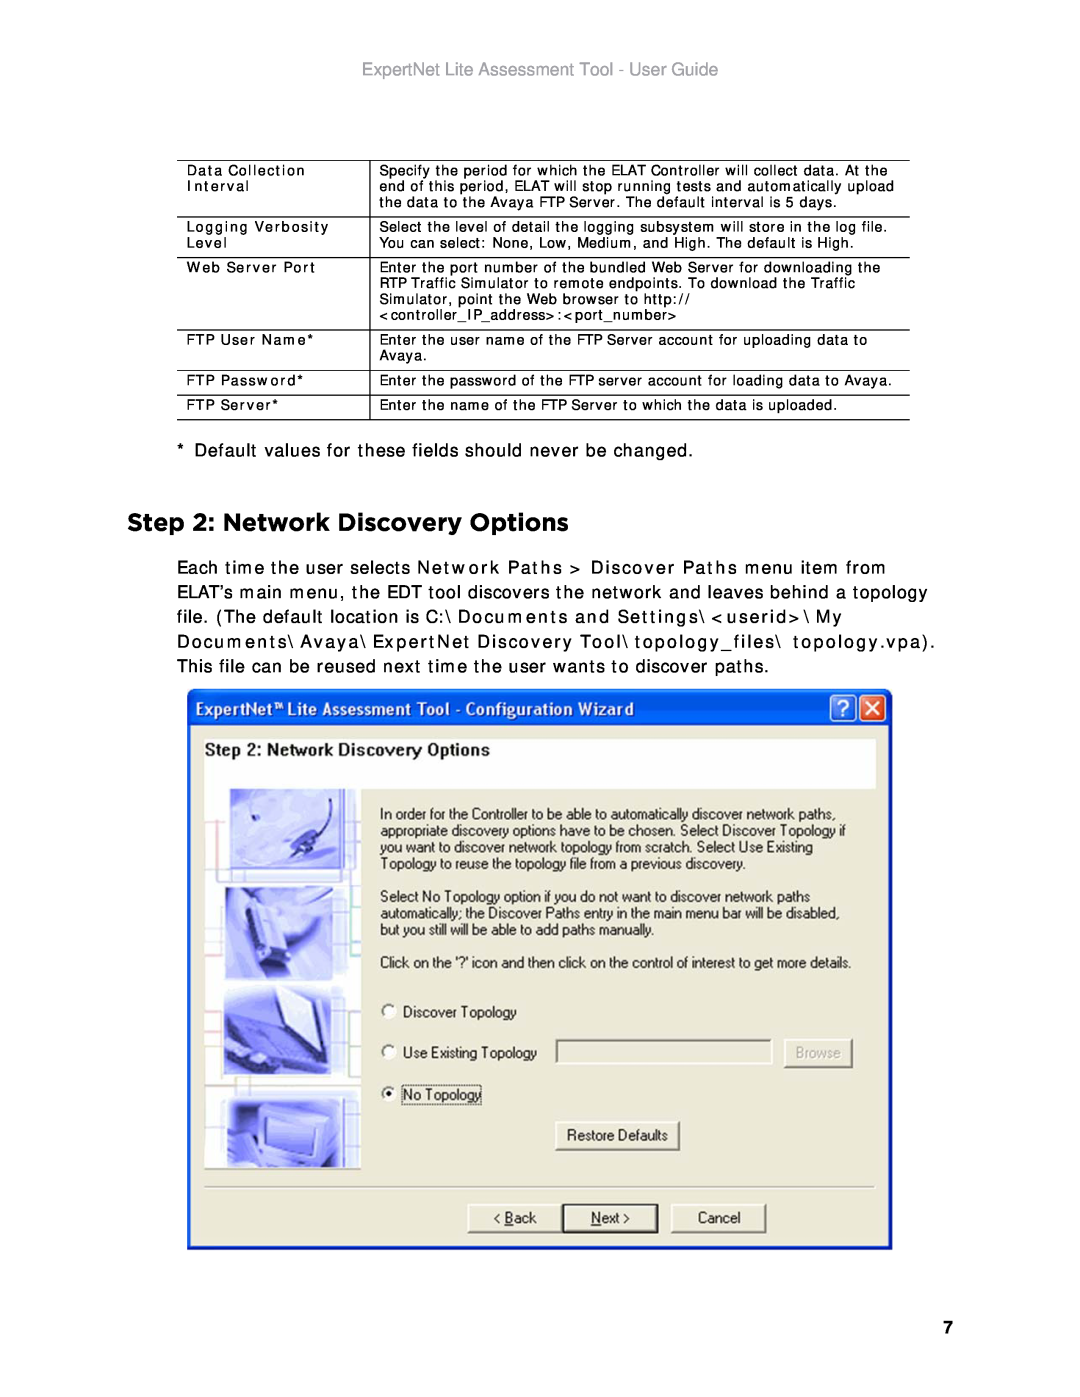 Avaya ELAT manual Network Discovery Options, ExpertNet Lite Assessment Tool - User Guide 